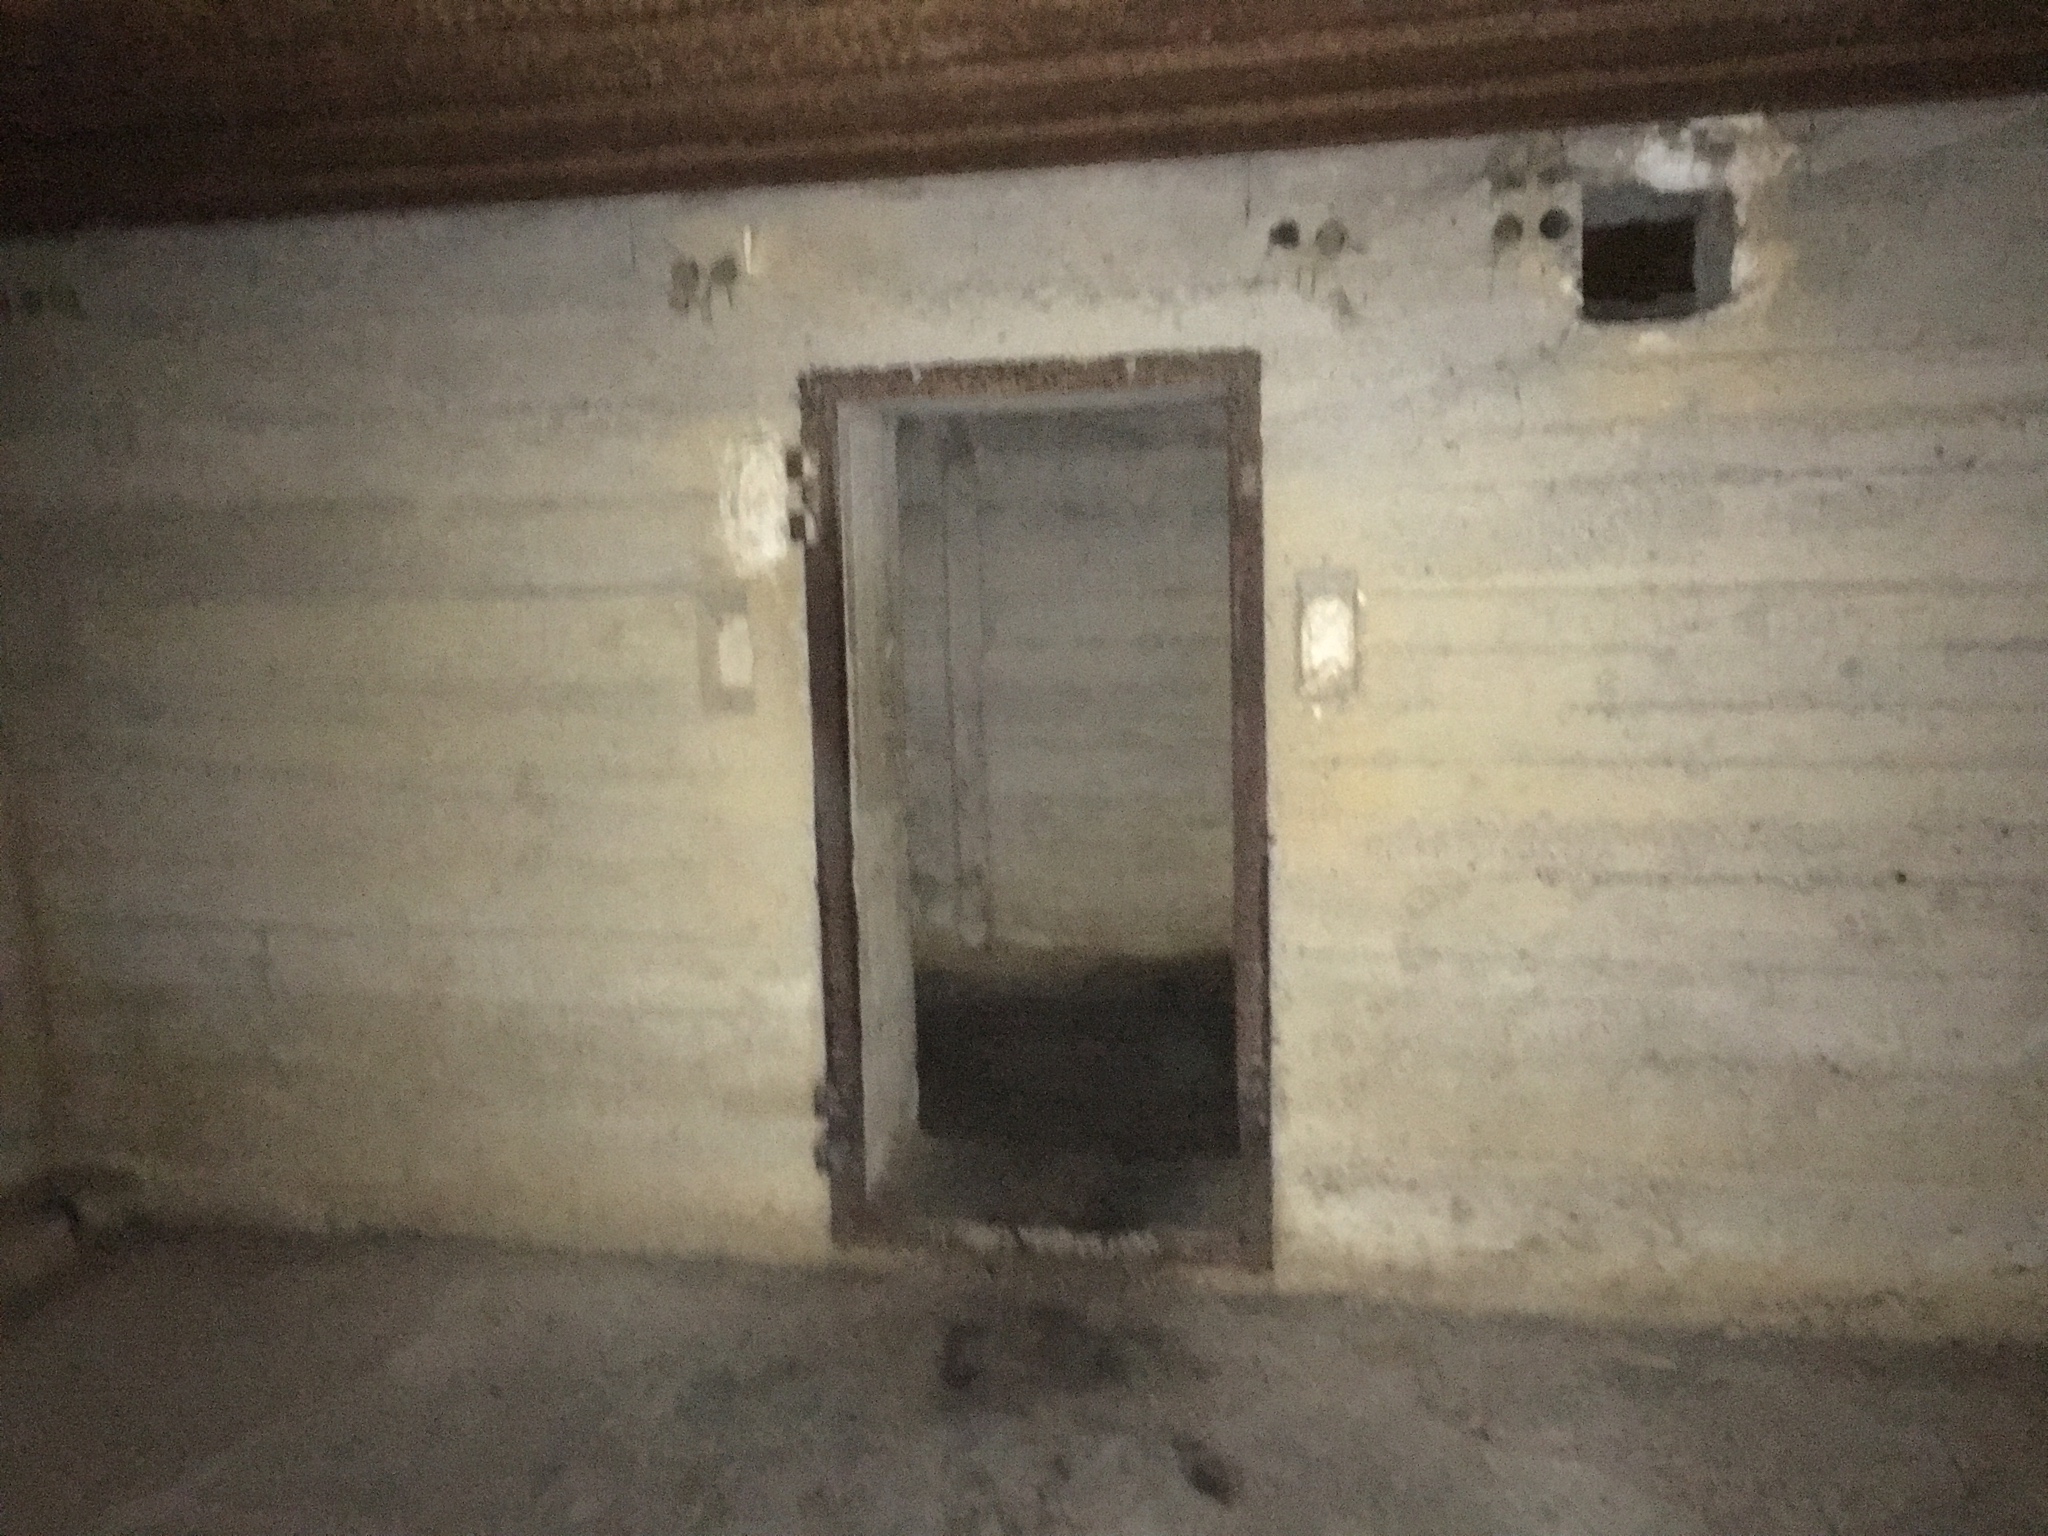 Inside the German bunker